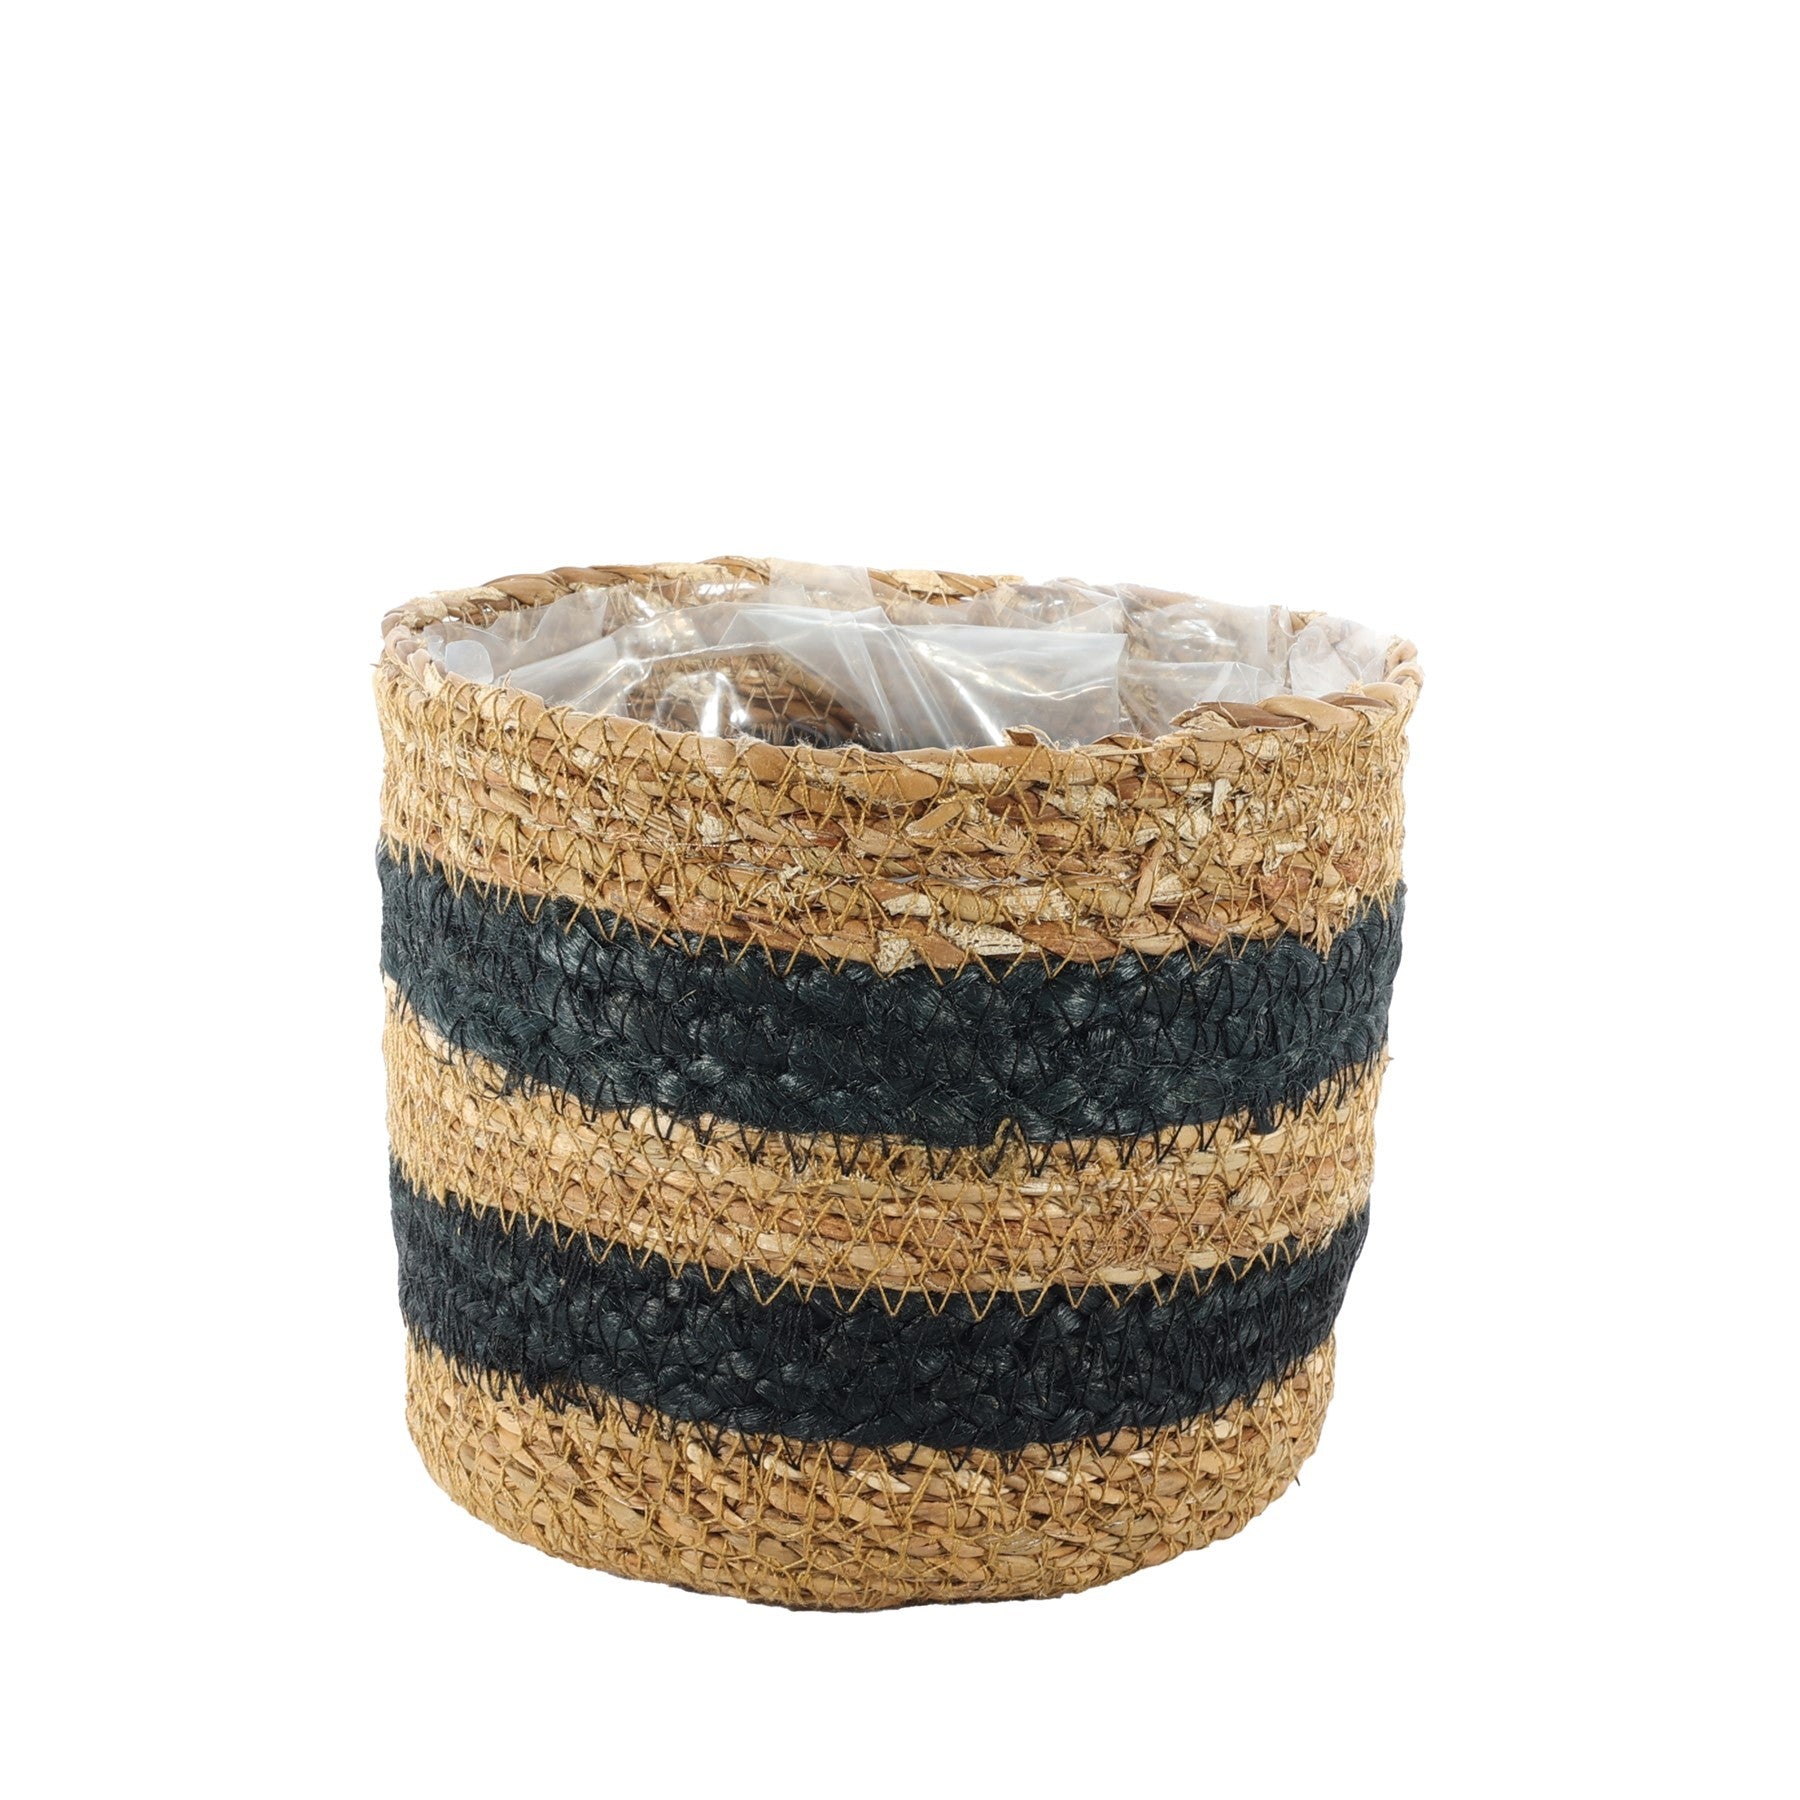 View Natural Black Striped Seagrass Basket 13cm x 15cm information